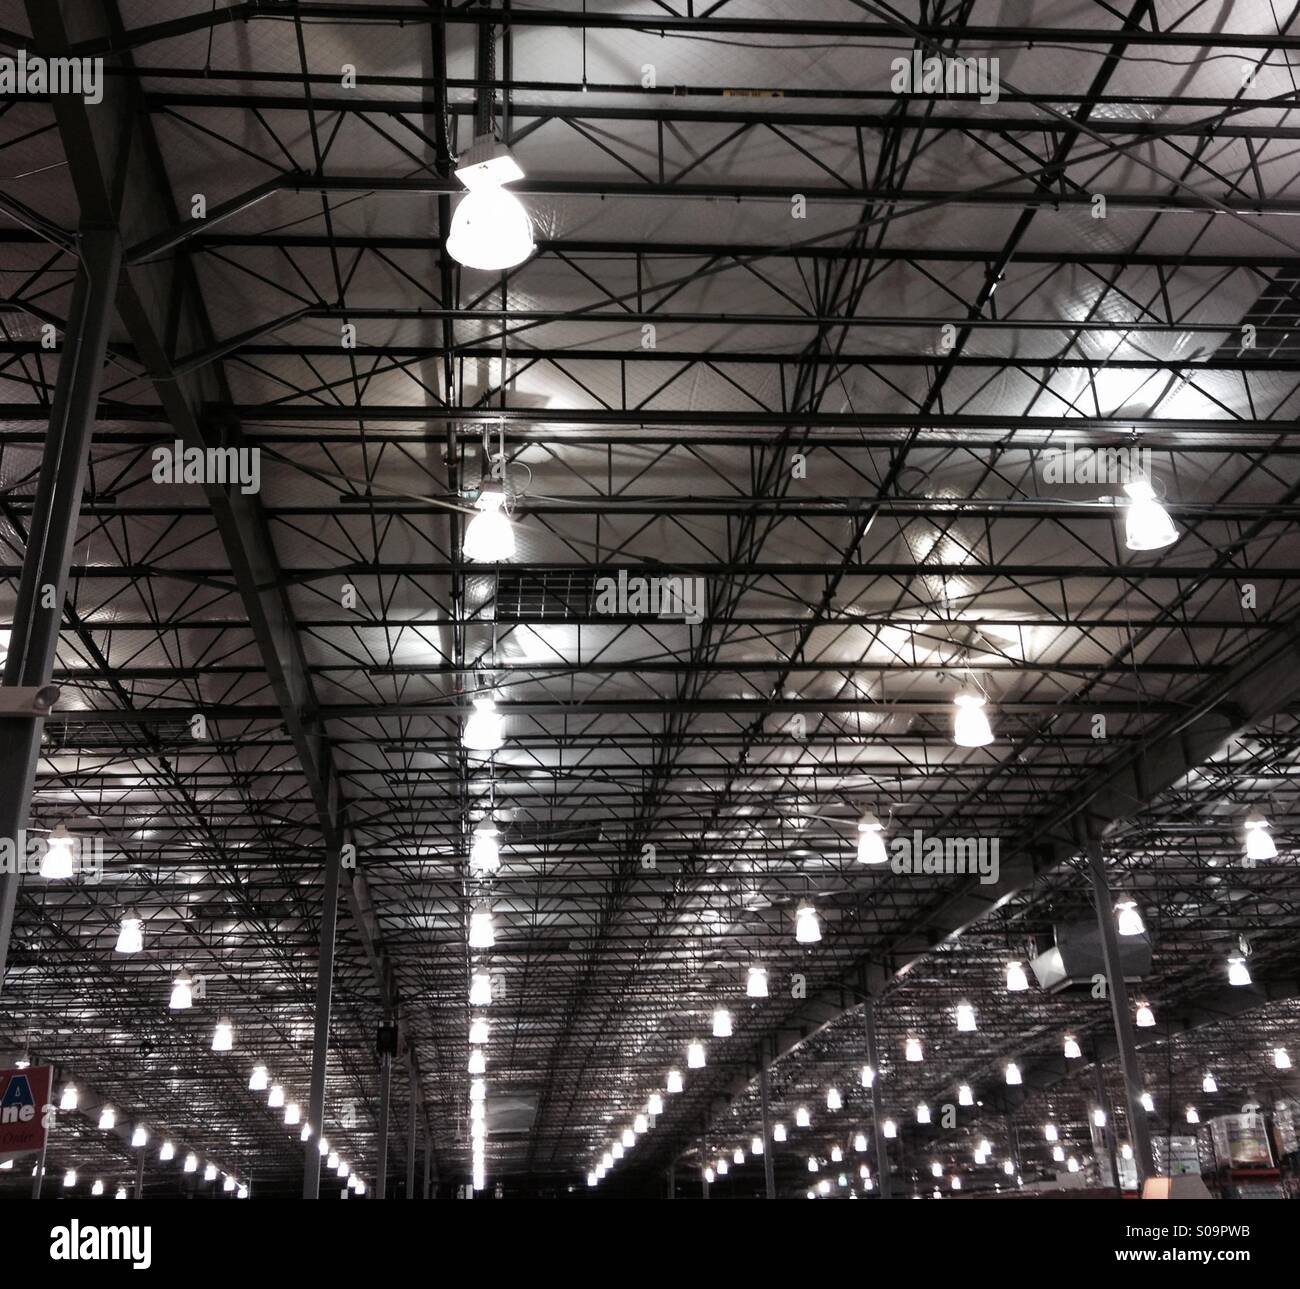 Mammoth hane Conform Industrial ceiling lights Stock Photo - Alamy